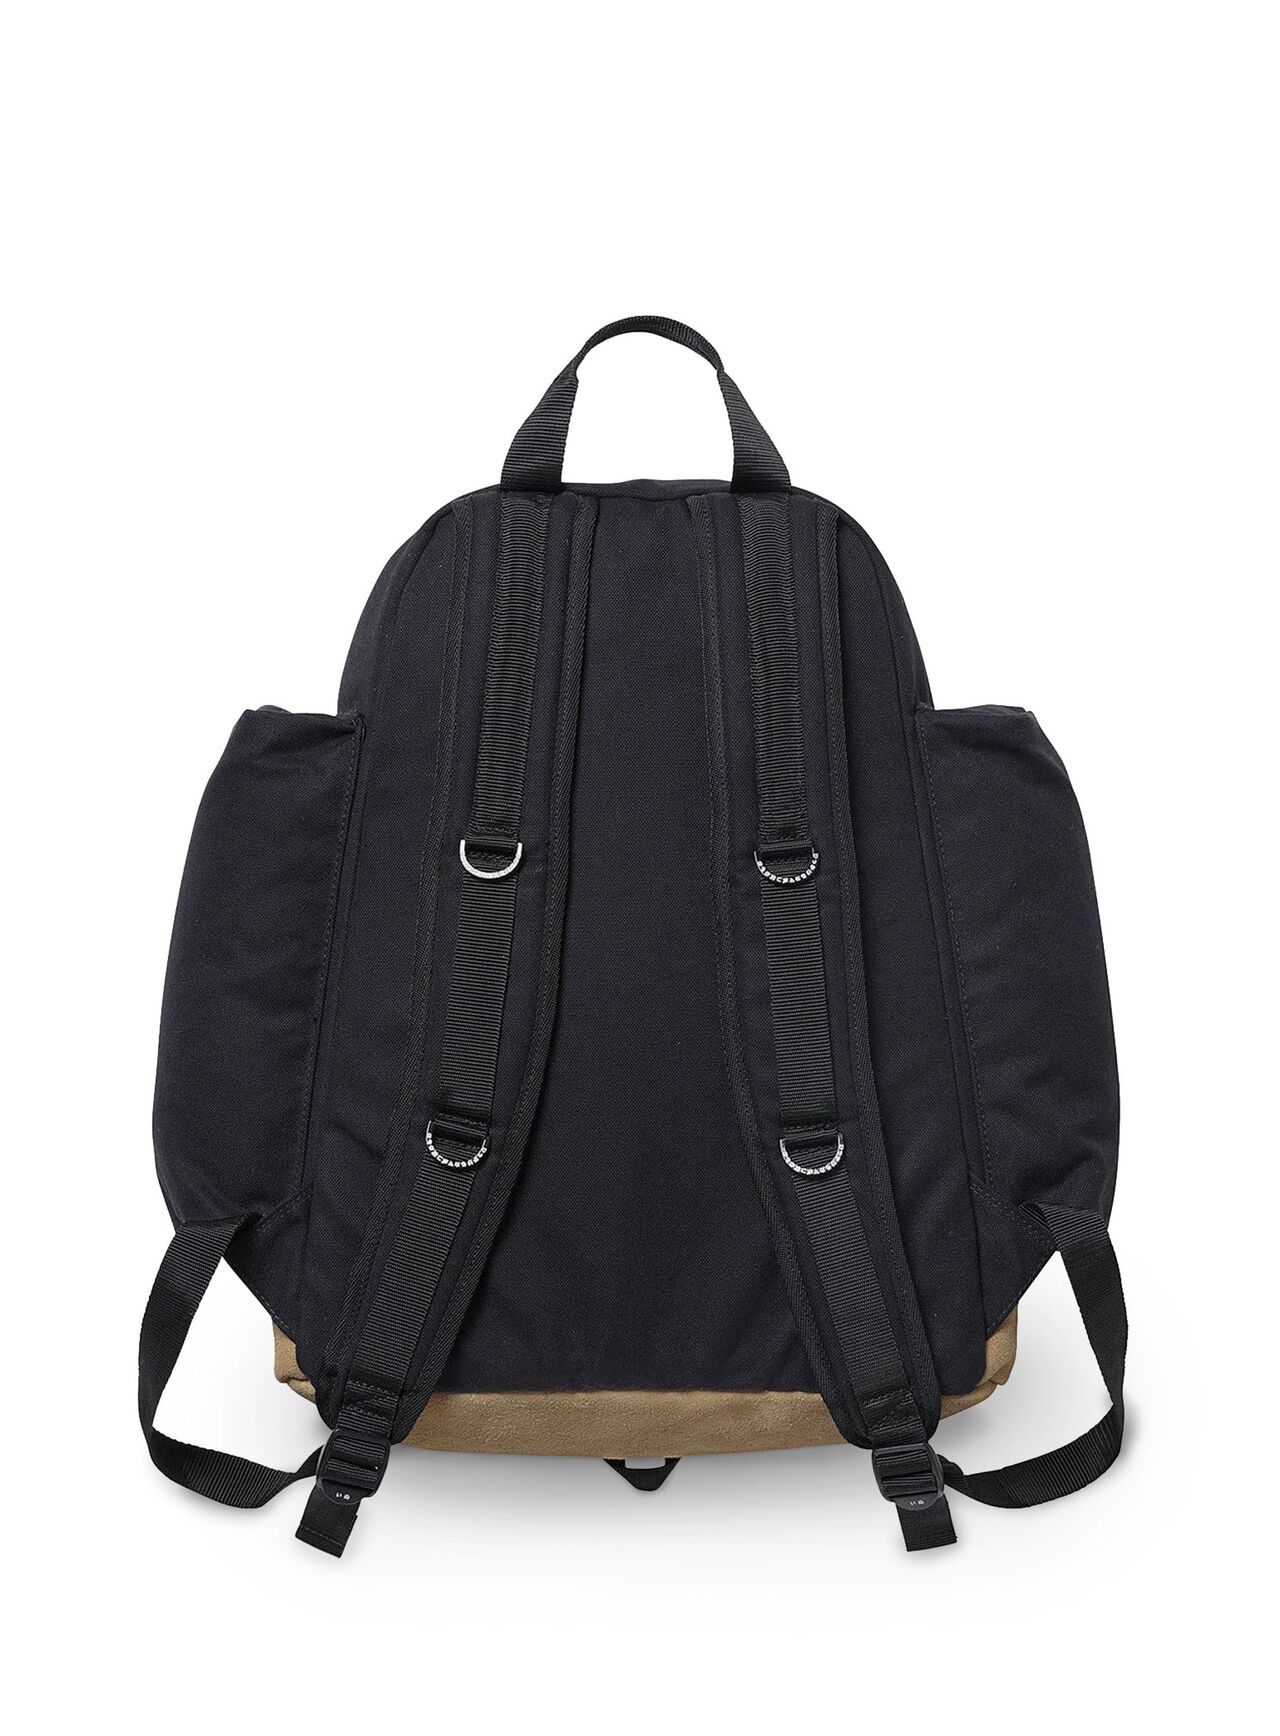 Bottom leather side box backpack,ONE, large image number 1